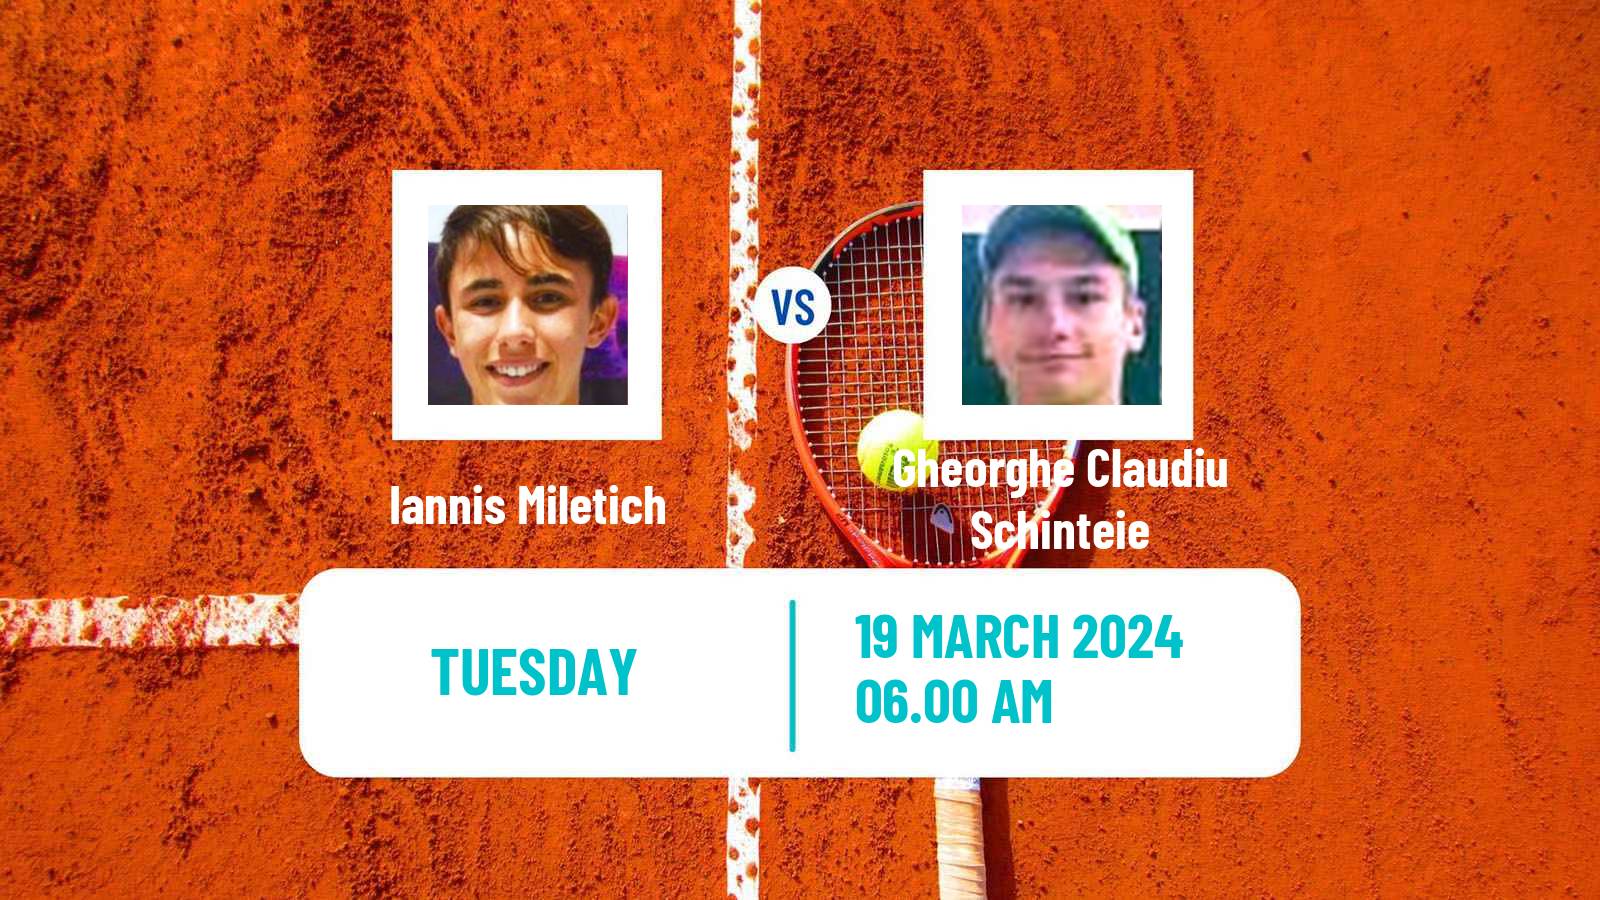 Tennis ITF M15 Alaminos Larnaca 2 Men Iannis Miletich - Gheorghe Claudiu Schinteie